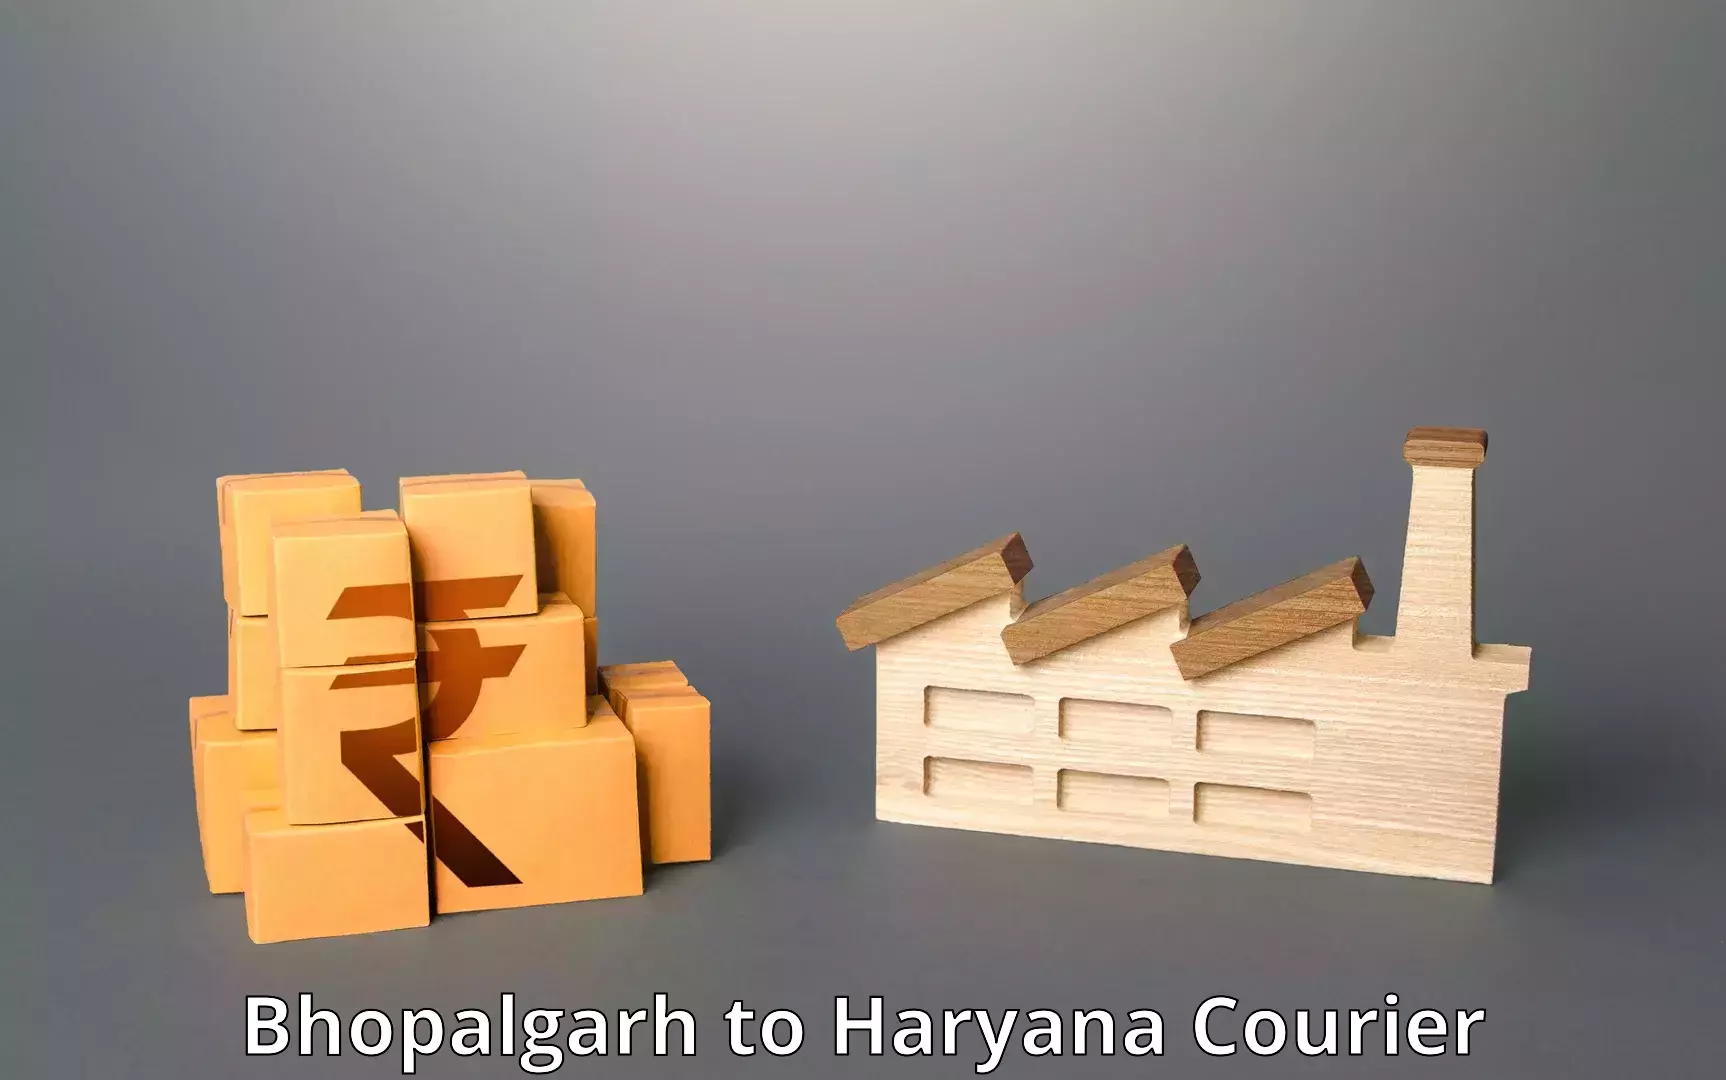 State-of-the-art courier technology Bhopalgarh to Shahabad Markanda